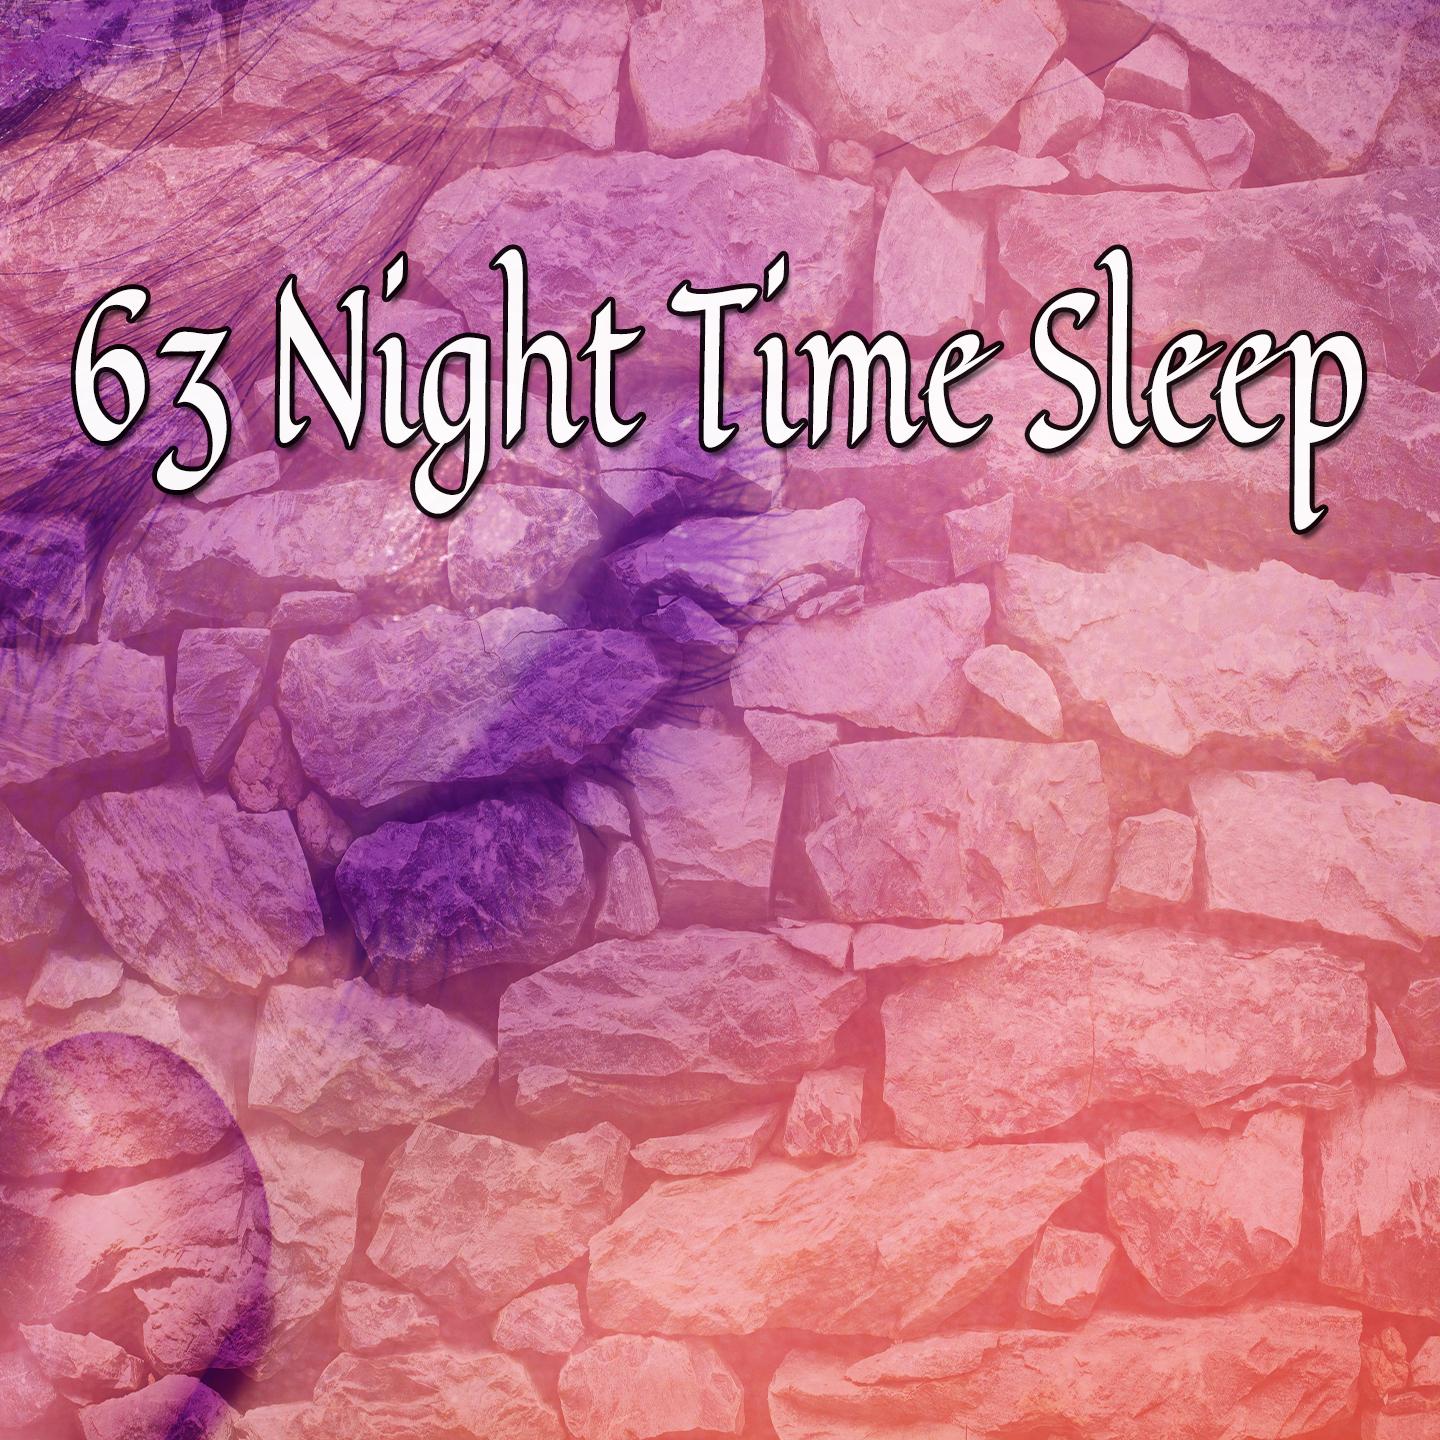 63 Night Time Sleep